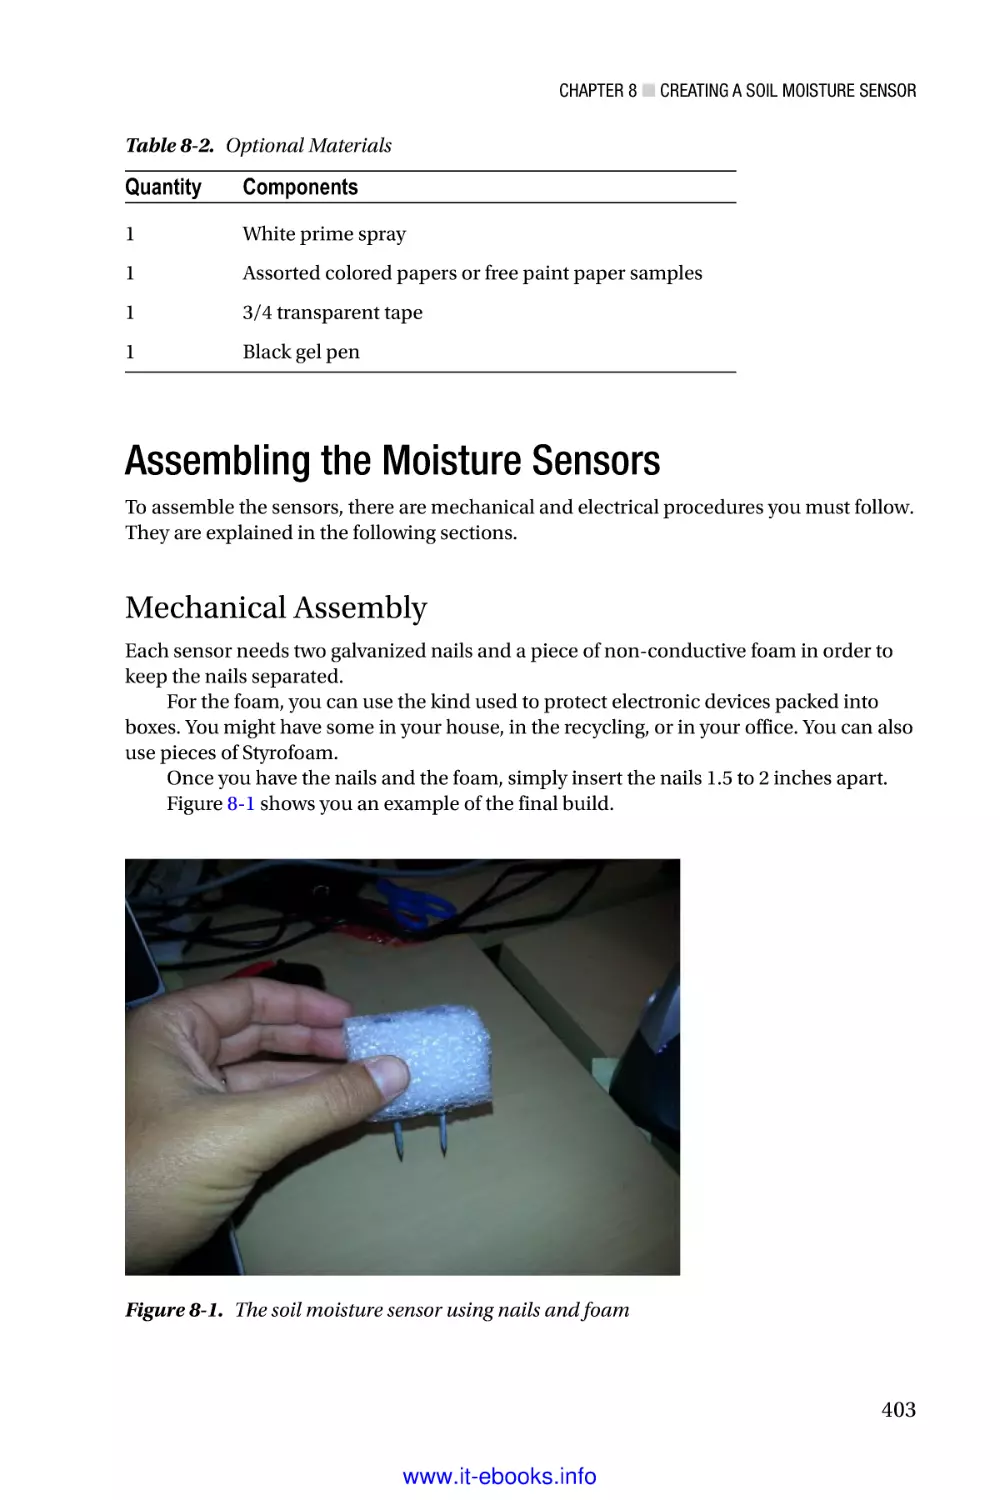 Assembling the Moisture Sensors
Mechanical Assembly